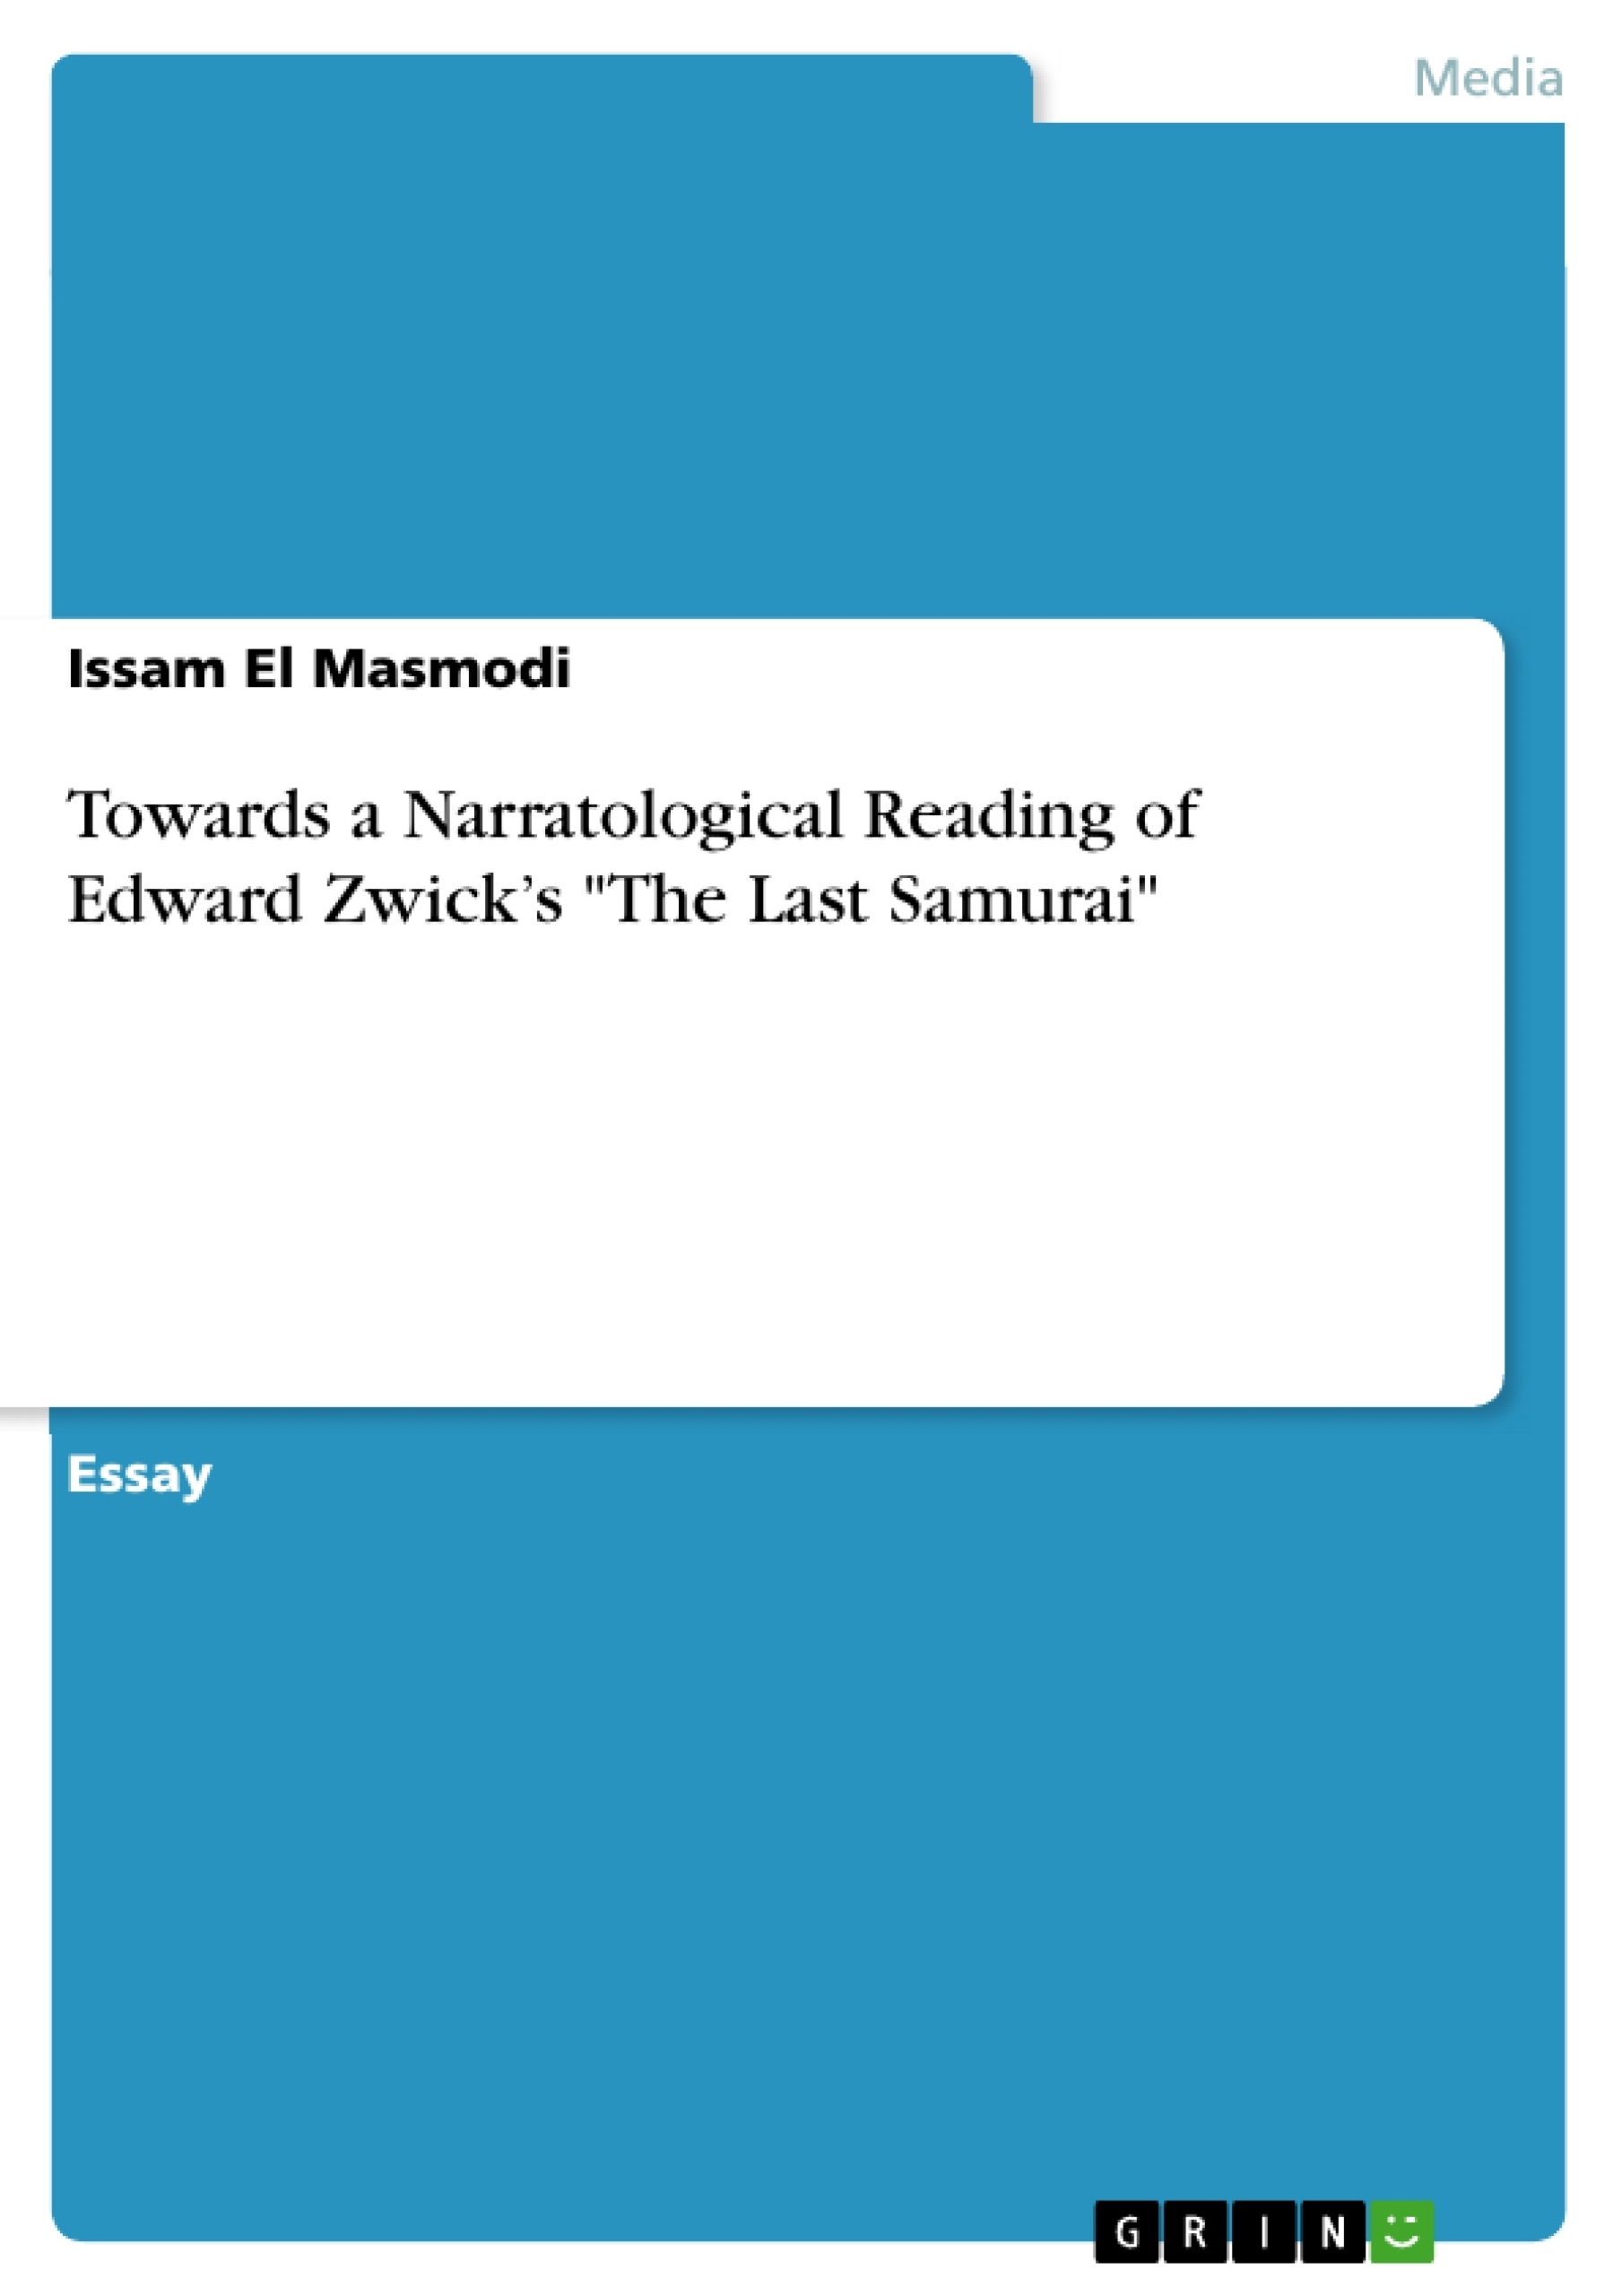 Titre: Towards a Narratological Reading of Edward Zwick’s "The Last Samurai"